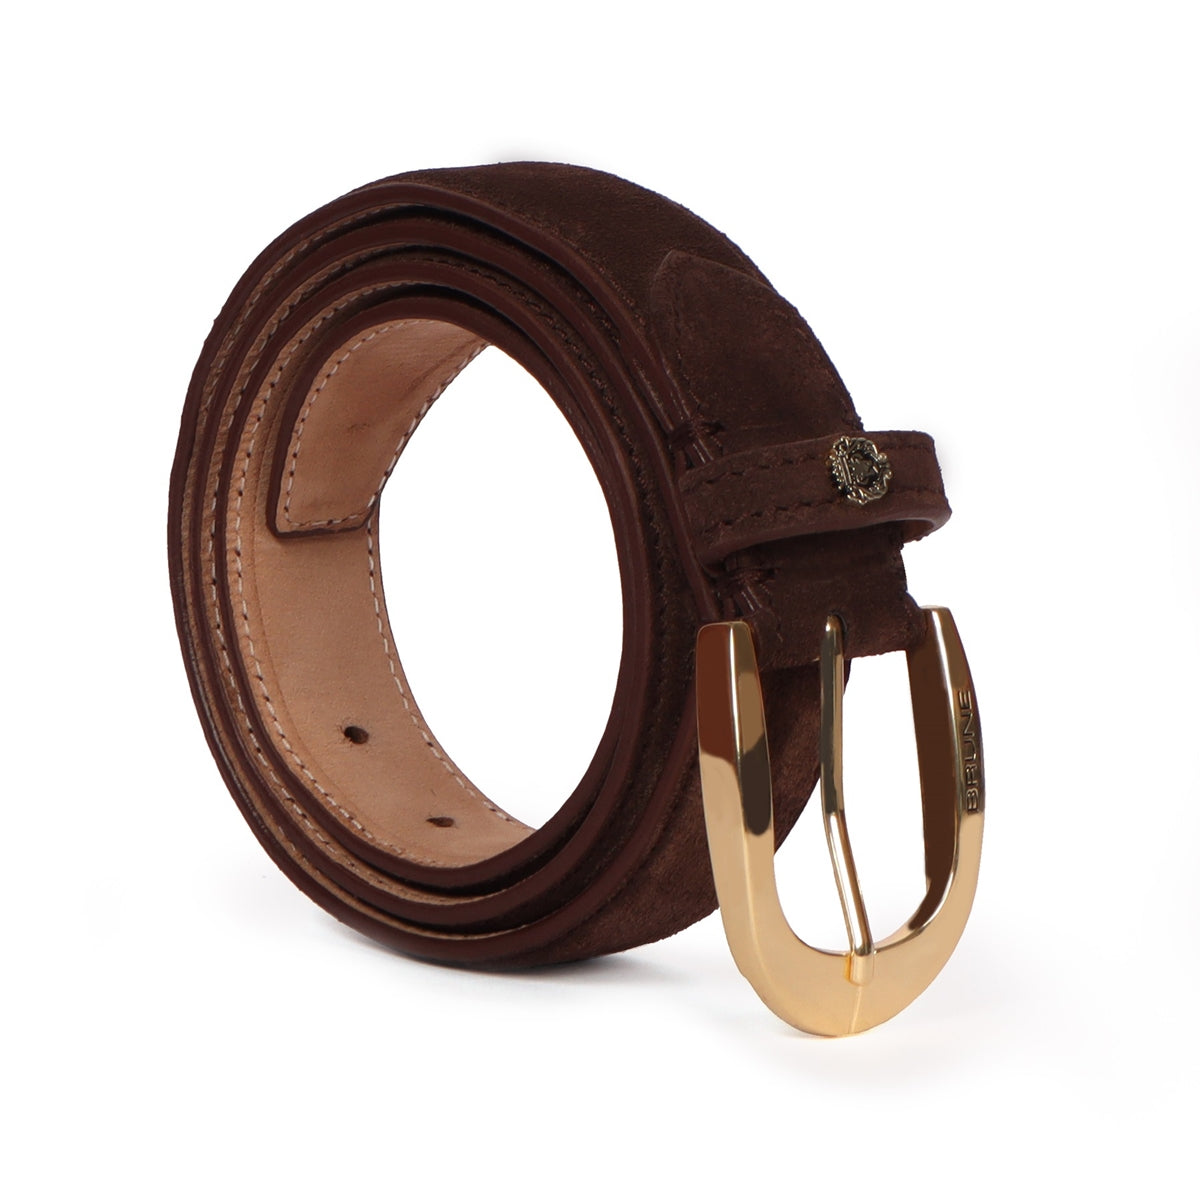 Mini Lion Dark Brown Suede Leather Oval Shape Buckle Men's Formal Belt By Brune & Bareskin 40